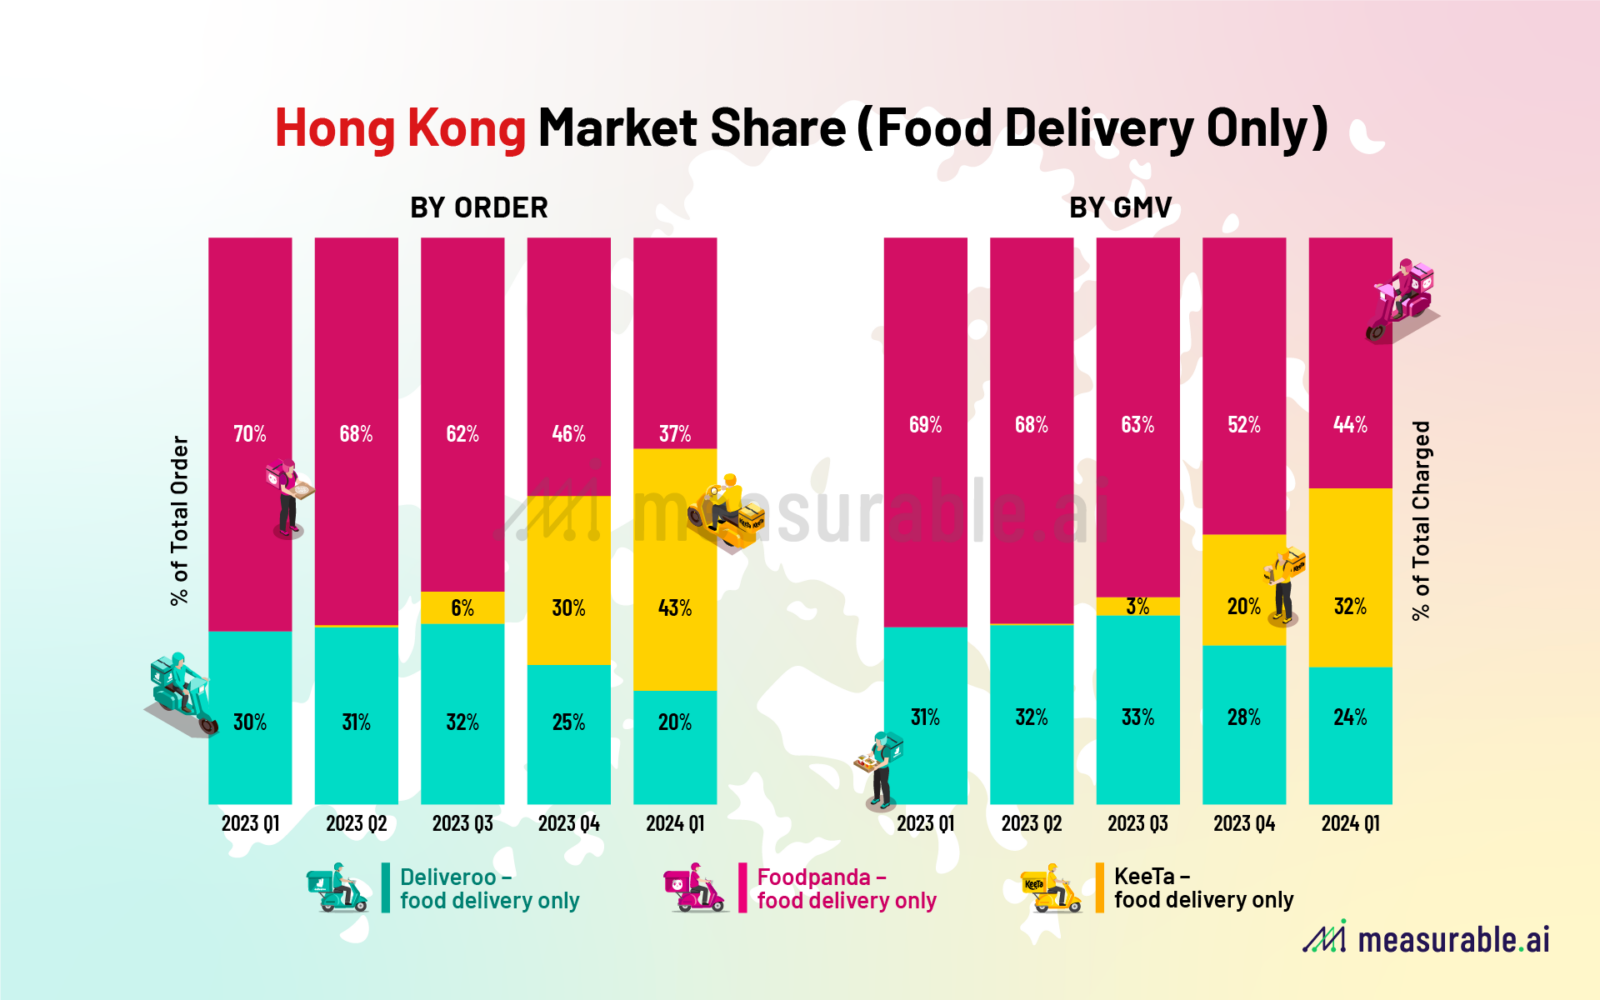 Hong Kong Online Delivery Market Share